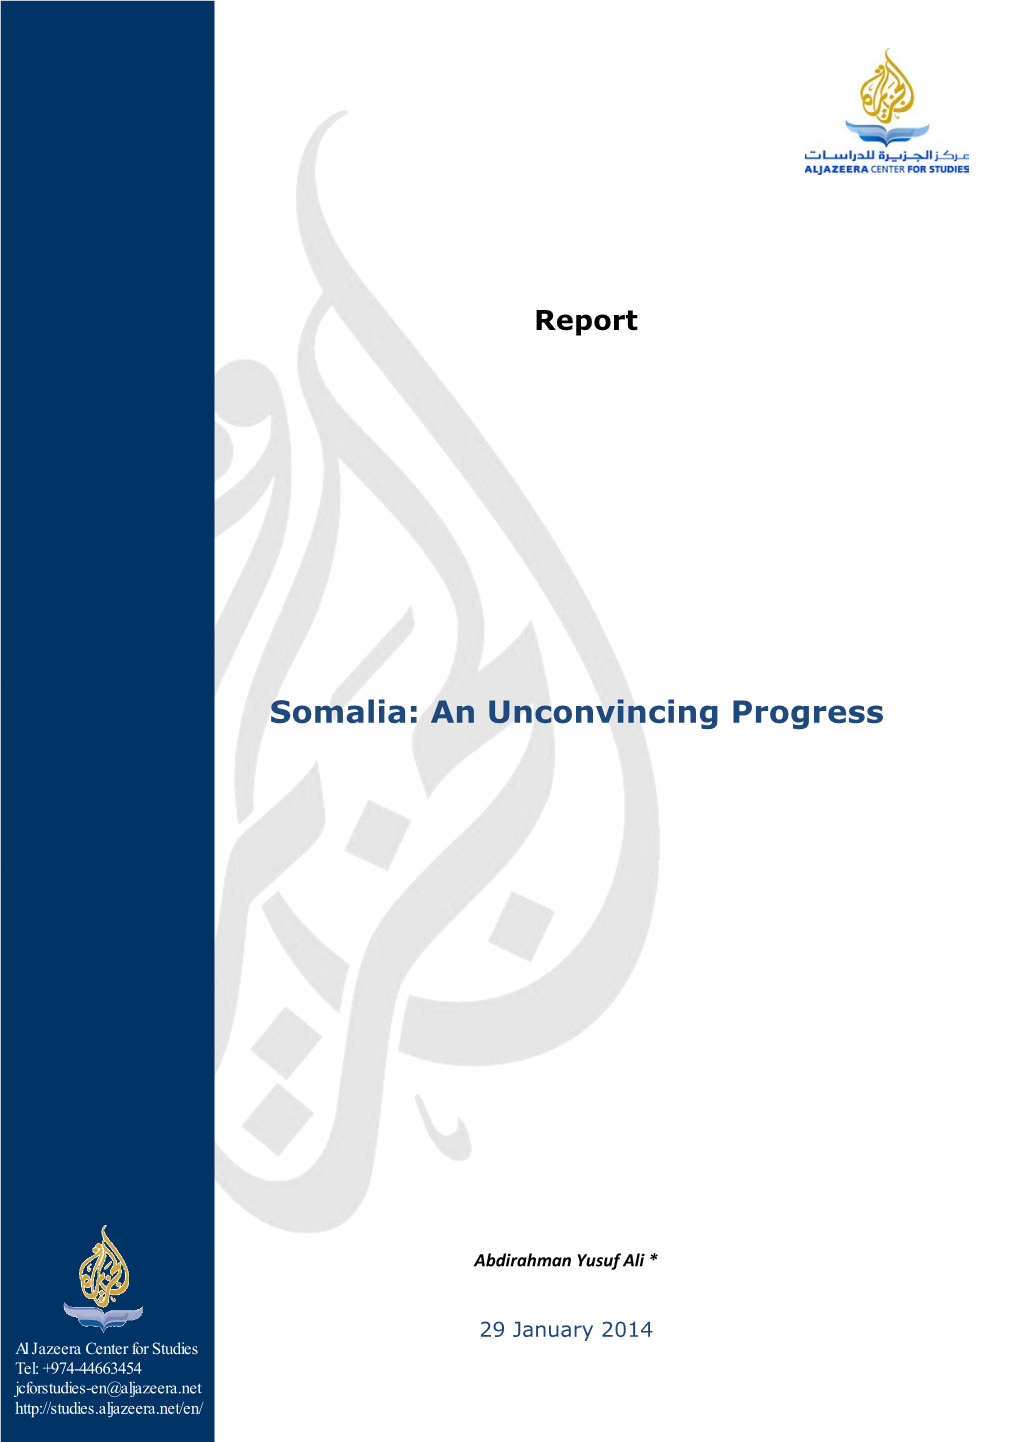 Somalia: an Unconvincing Progress